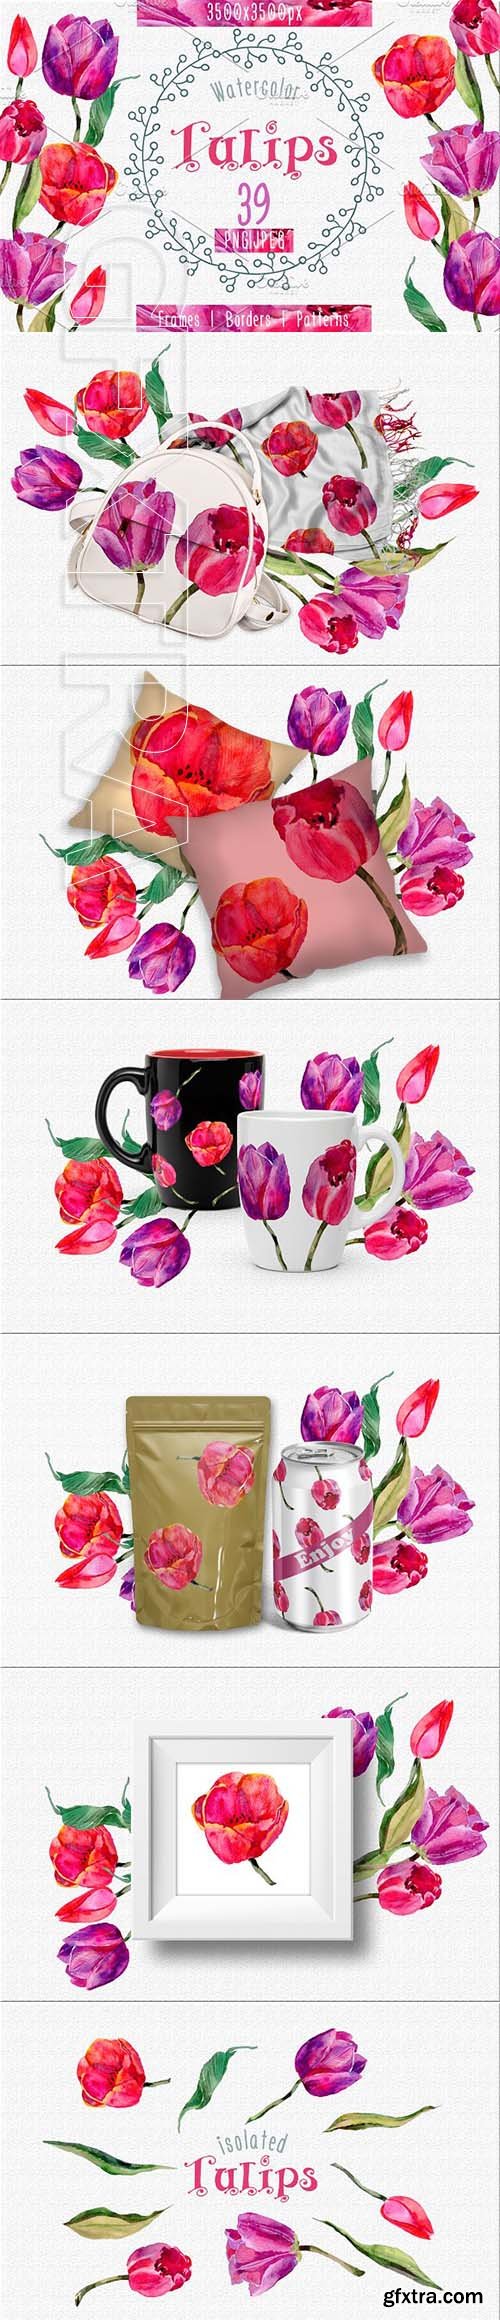 CreativeMarket - Tulips PNG watercolor flower set 2392711